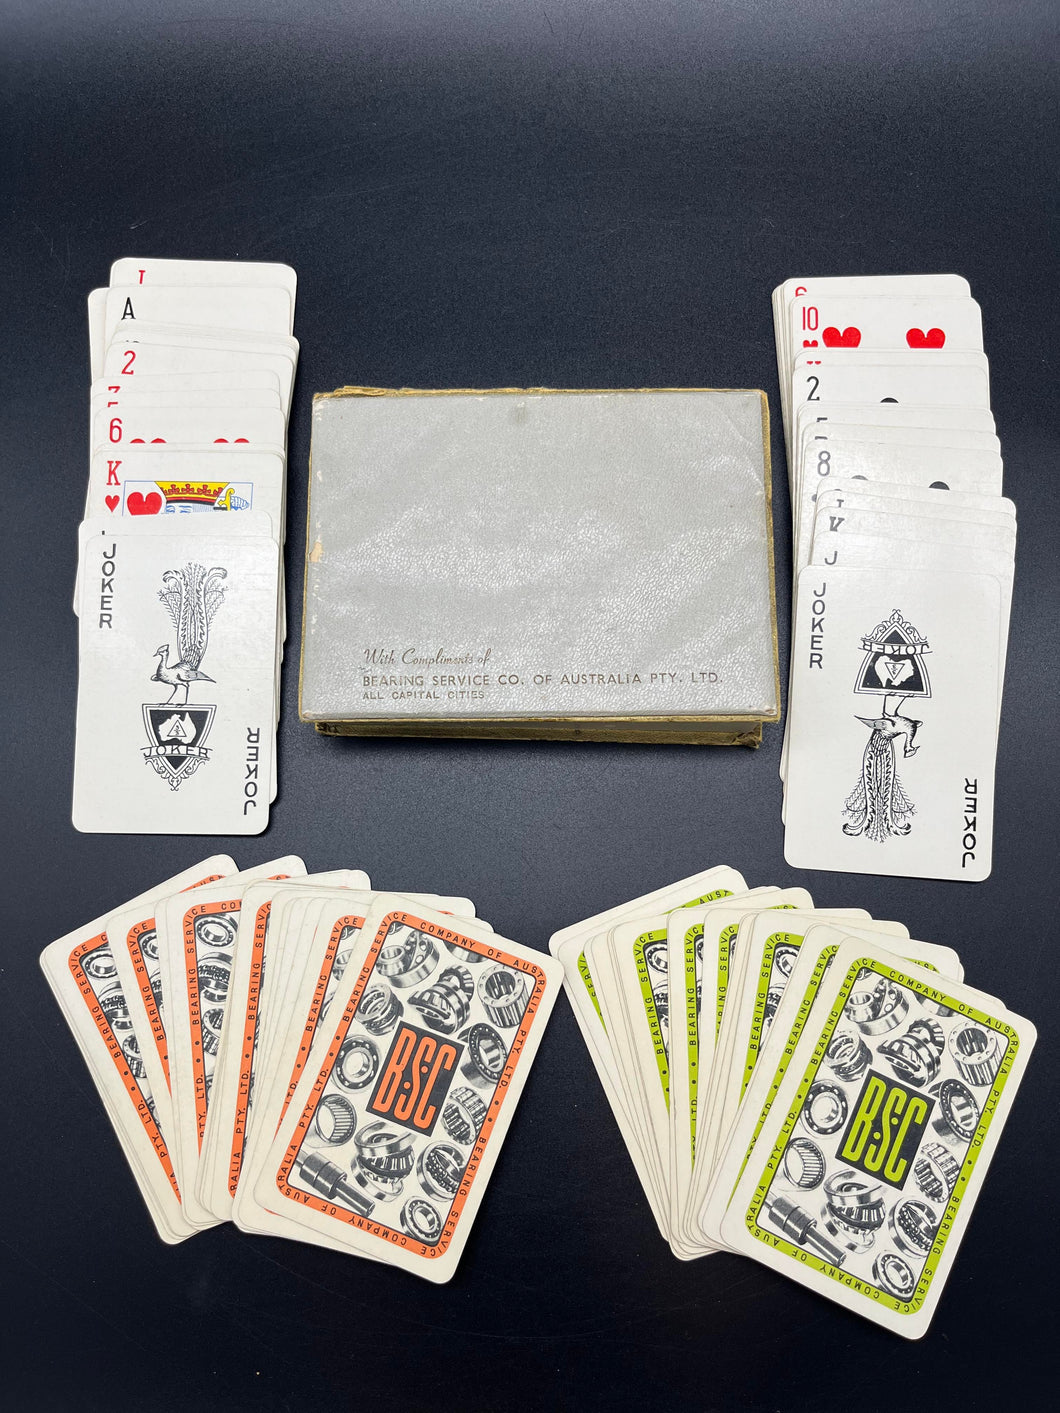 Bearing Service Company Box of Playing Cards - Set